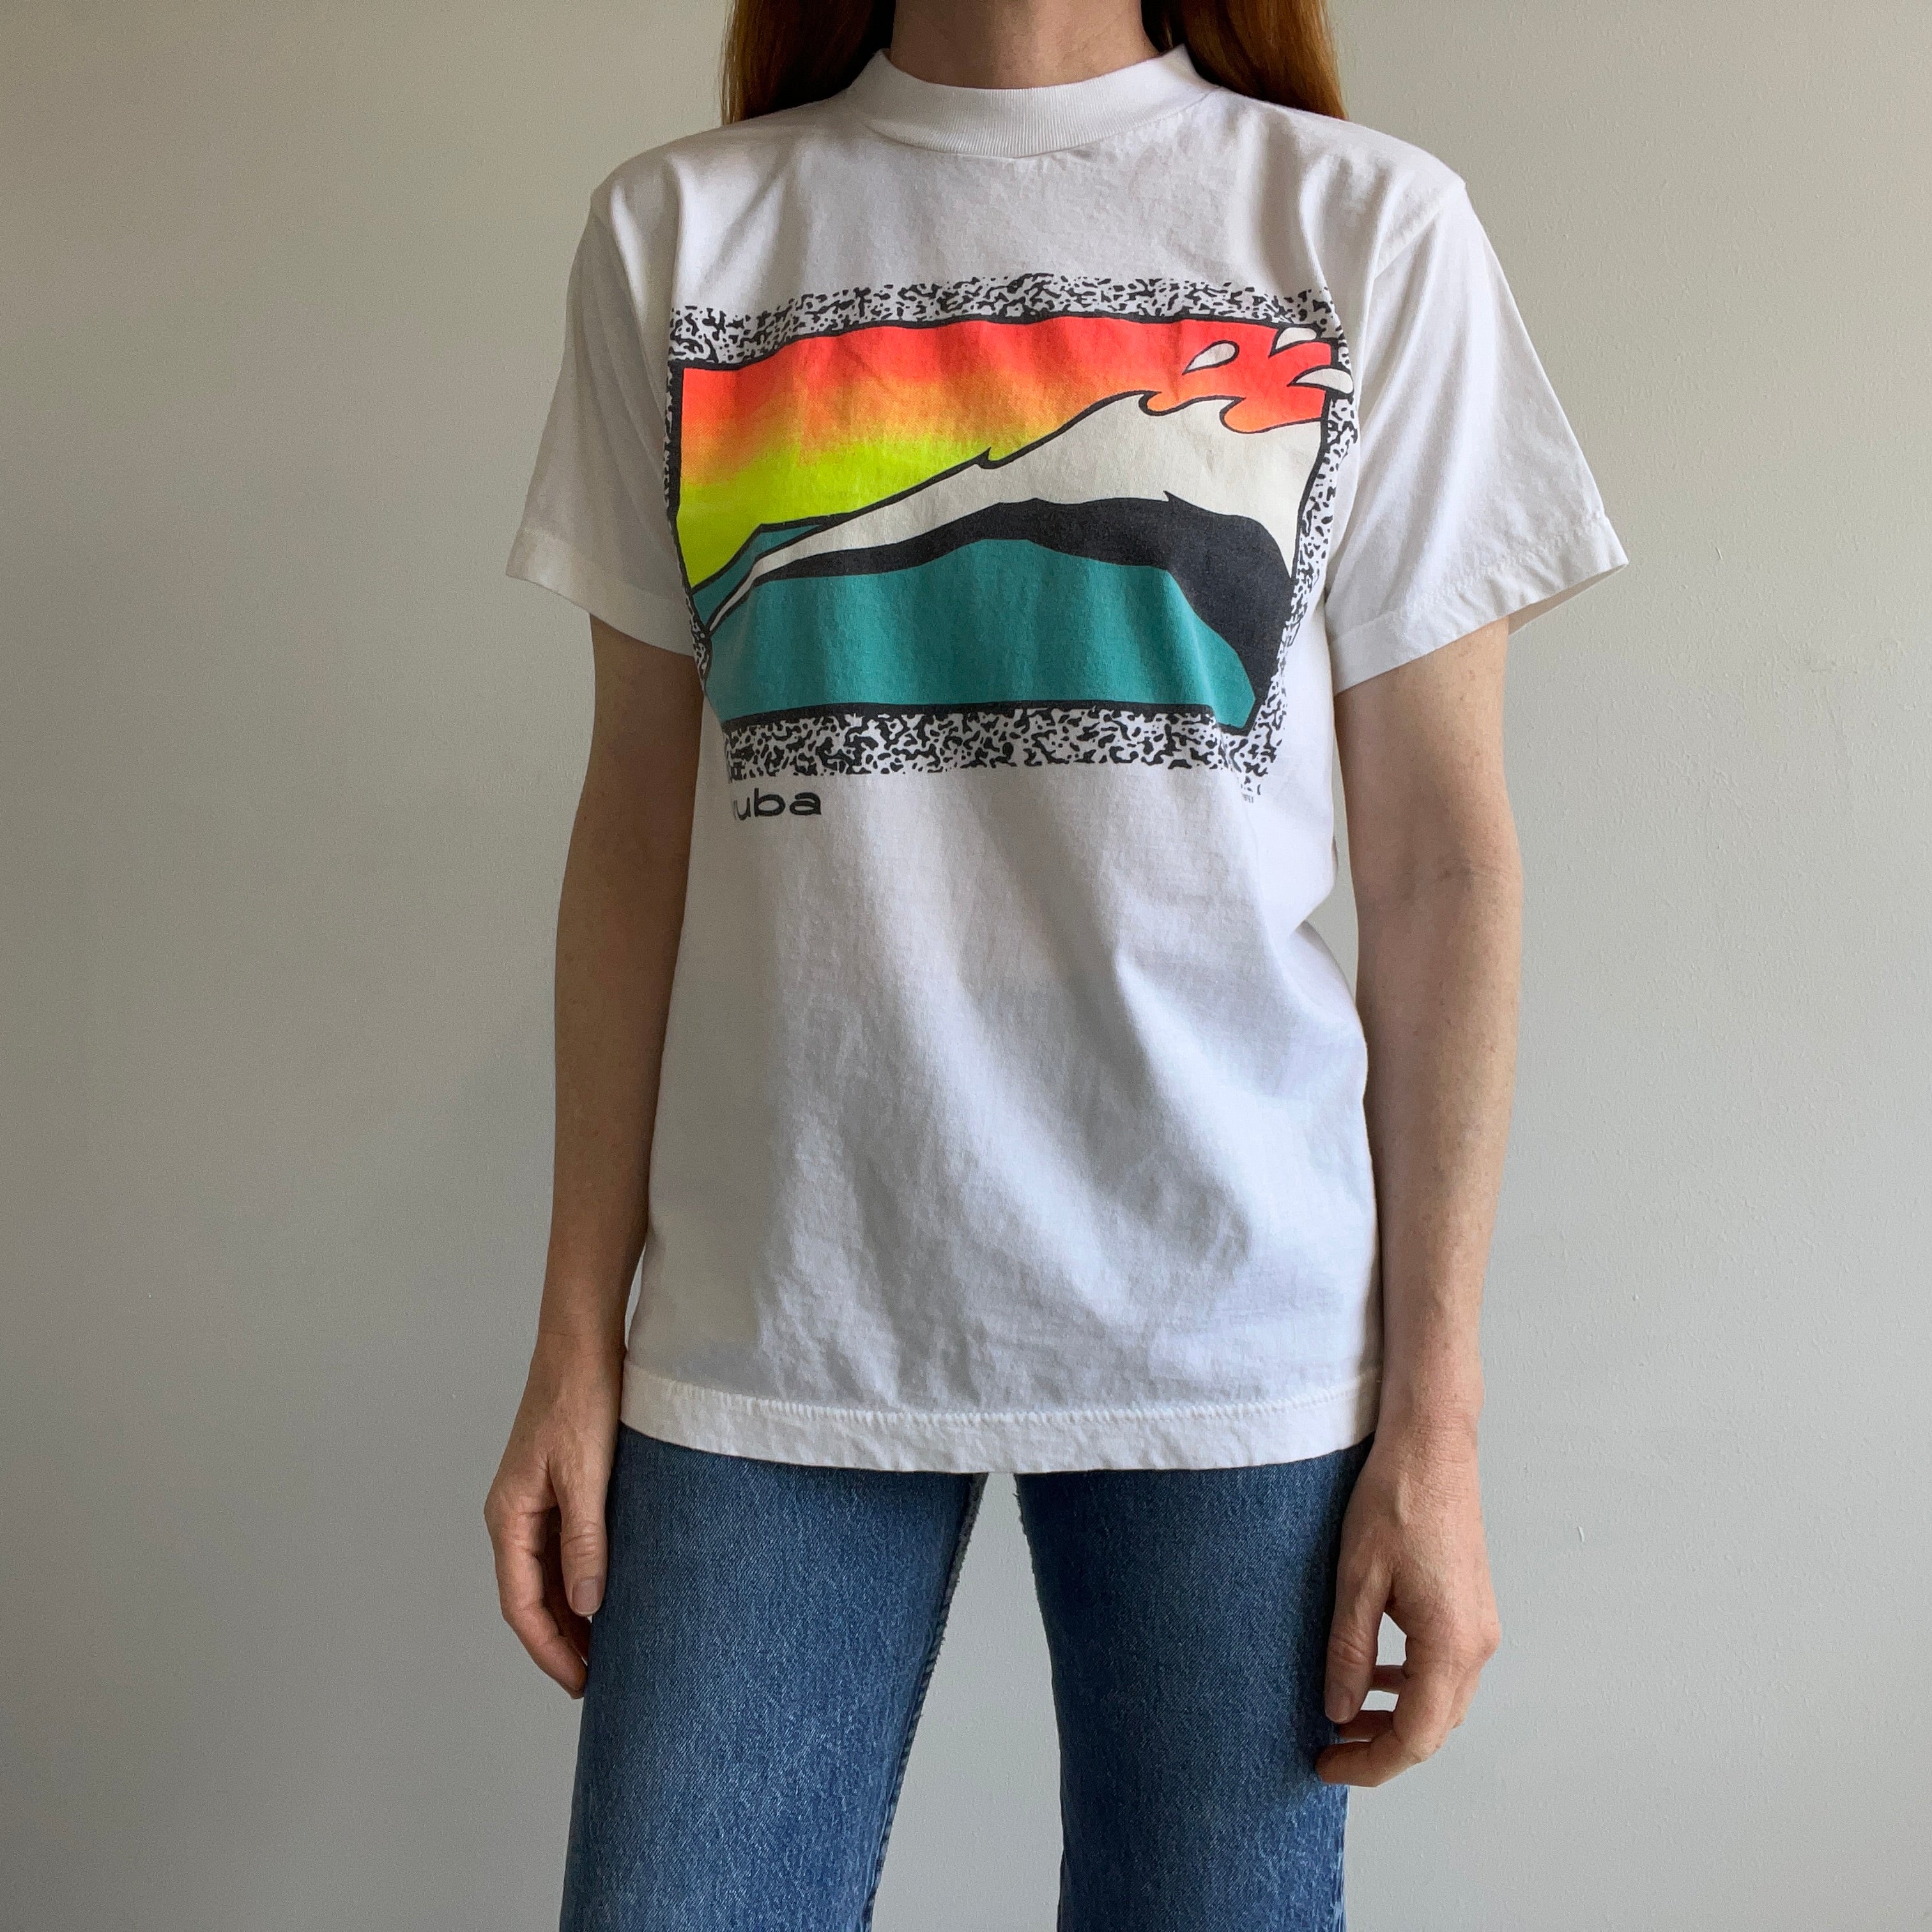 1980s Aruba Tourist T-Shirt